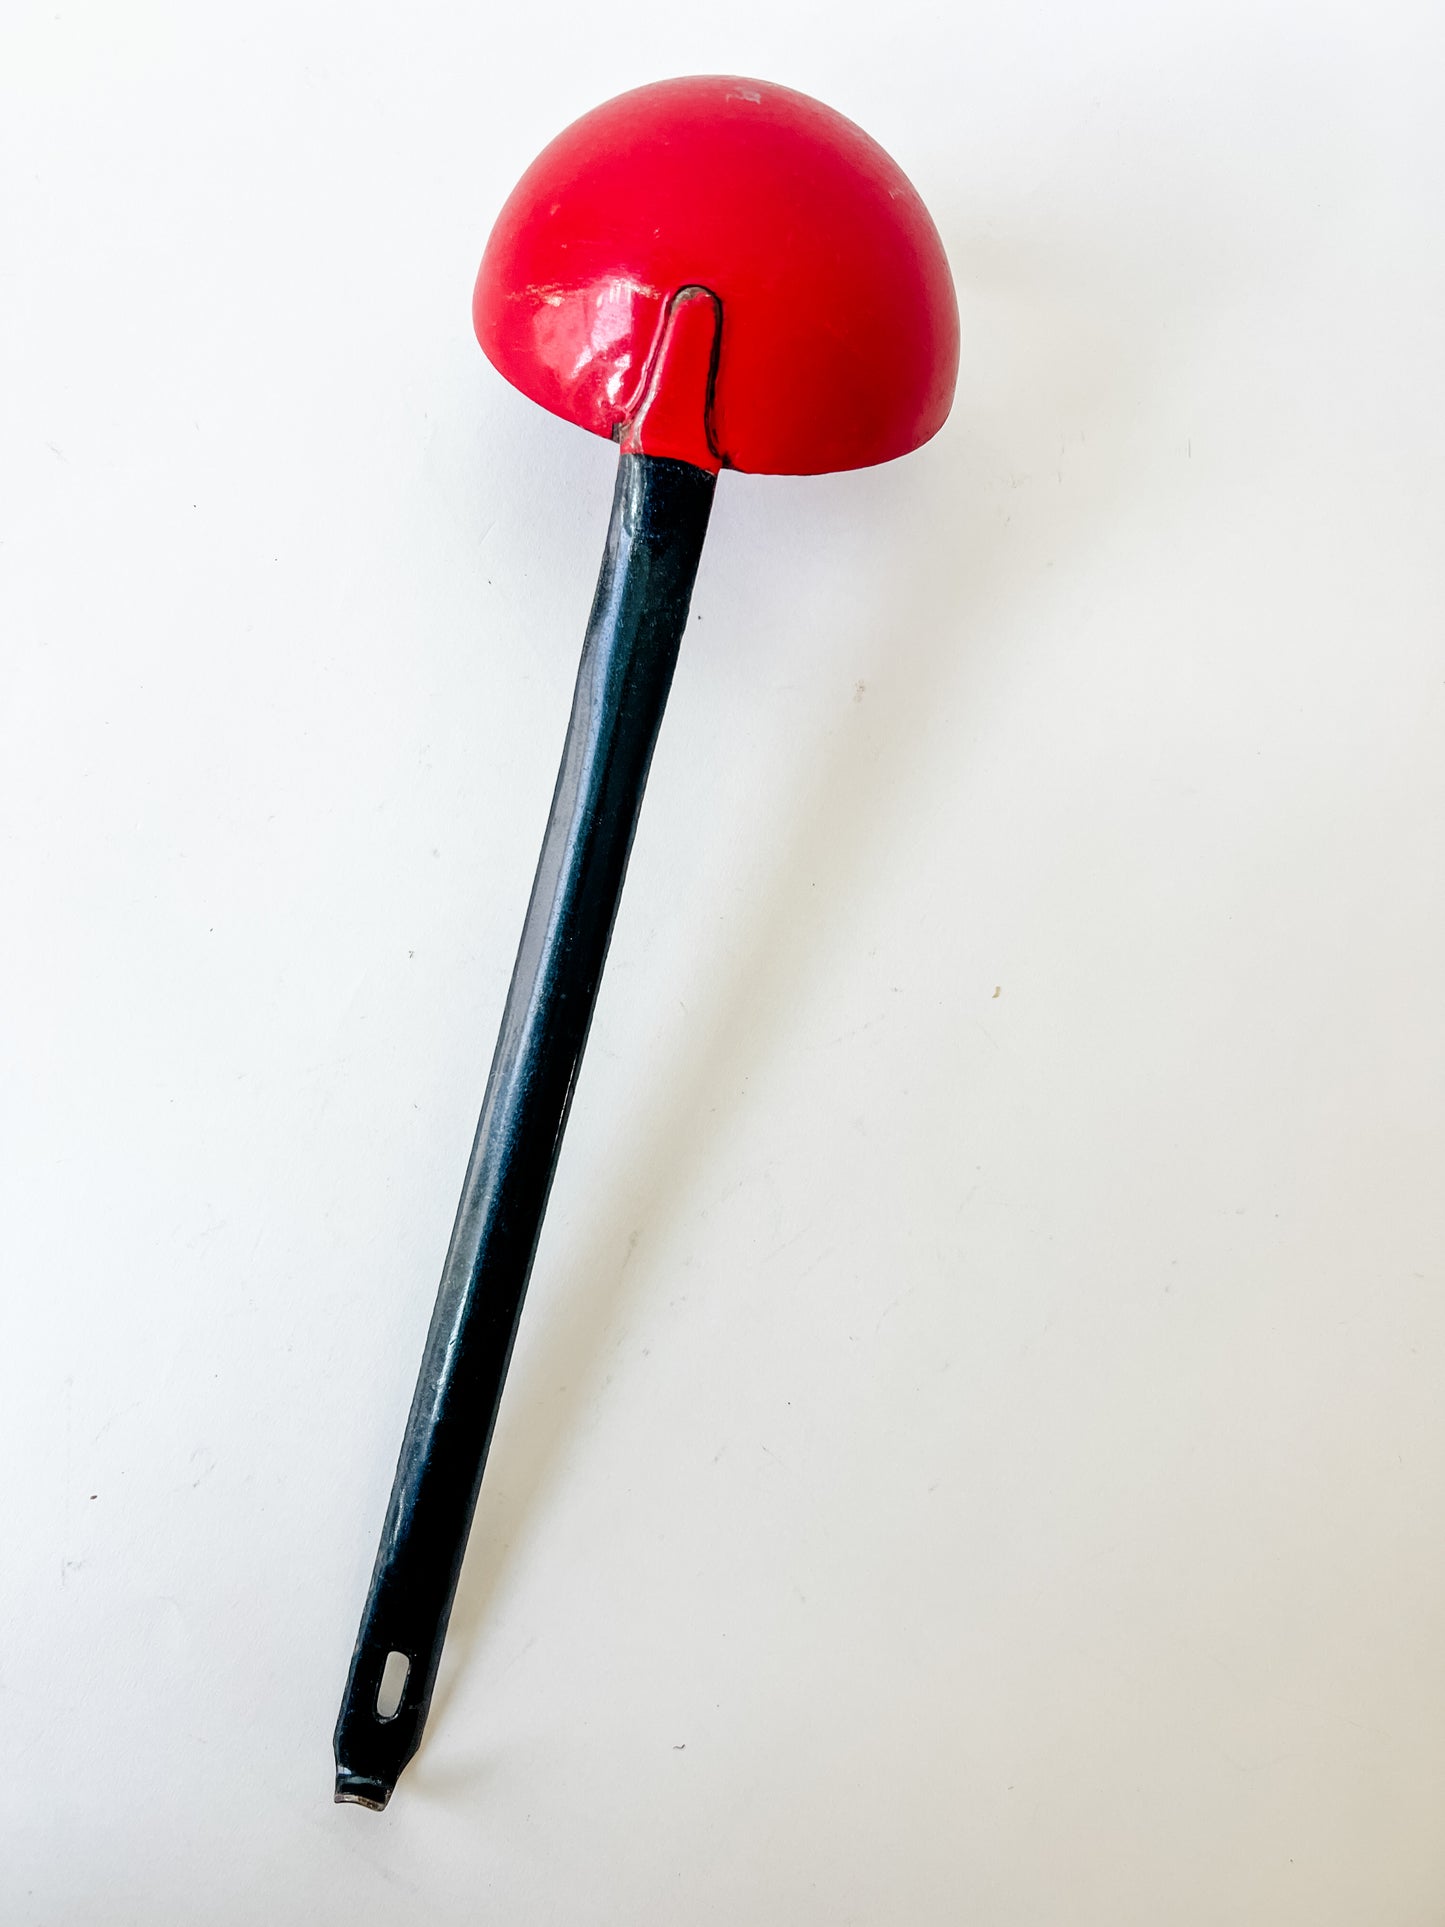 Vintage French Enamel Ladle (black handle and red ladle)